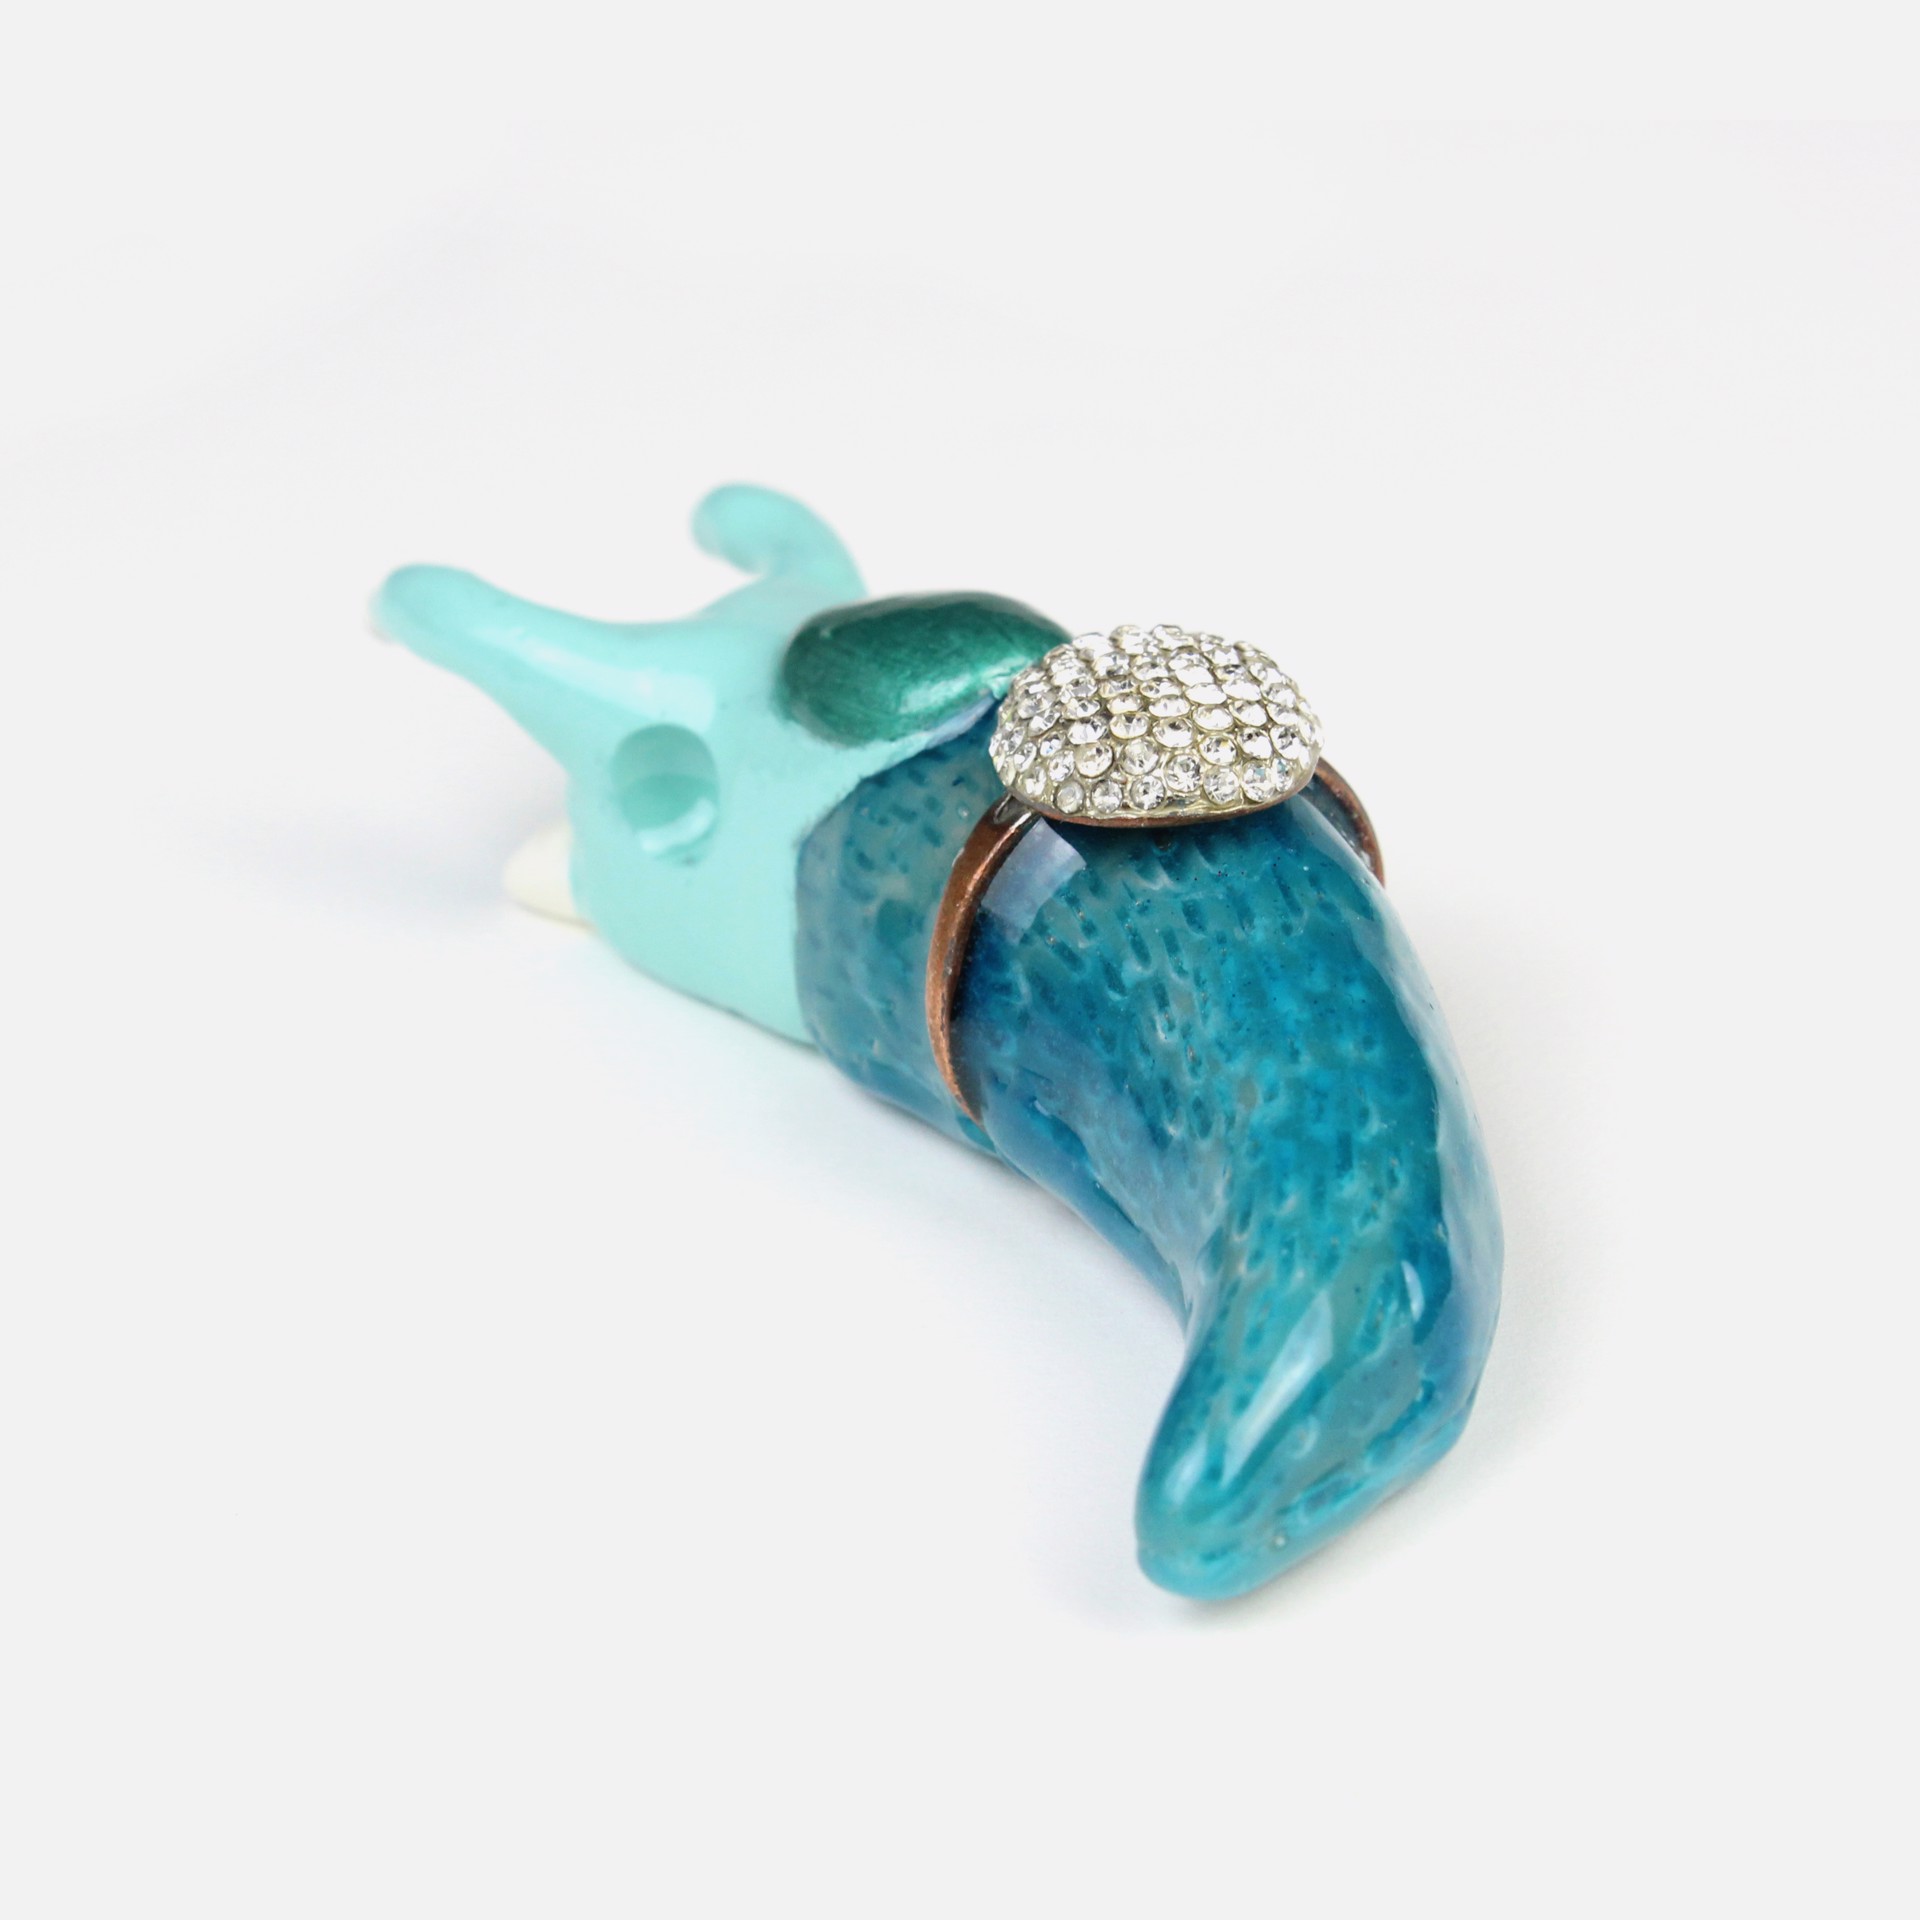 Diamond Slug (Brooch) by Märta Mattsson